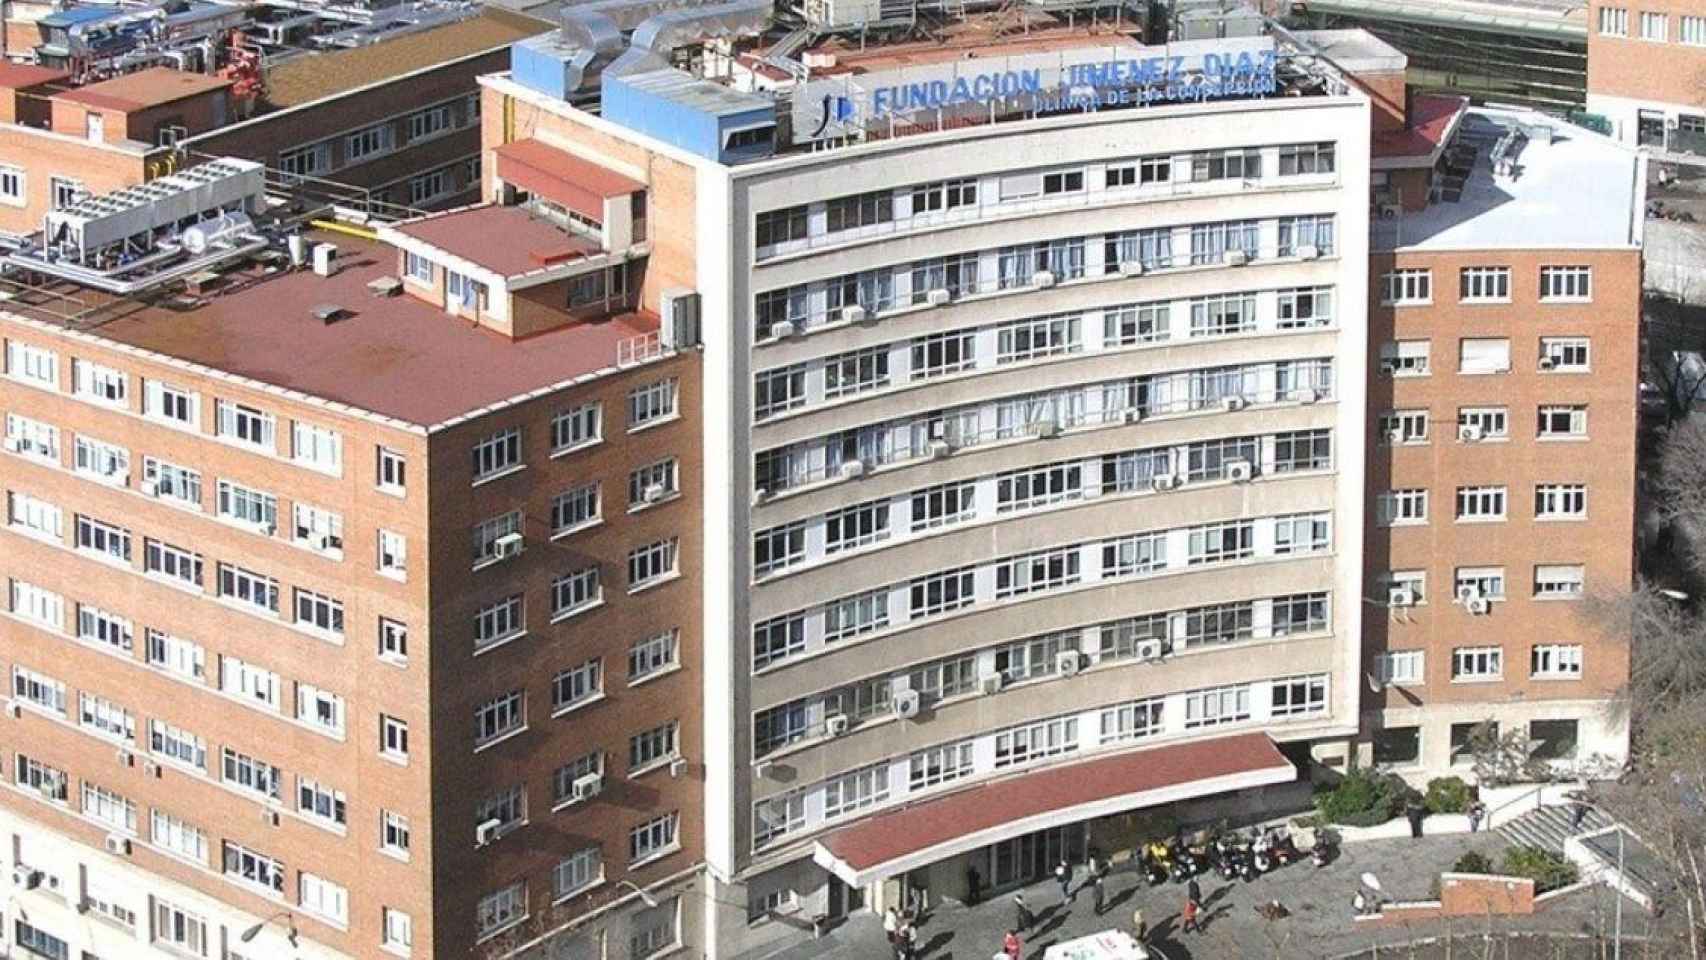 El hospital Fundación Jiménez Díaz de Madrid en una imagen de archivo / FUNDACIÓN JIMÉNEZ DÍAZ